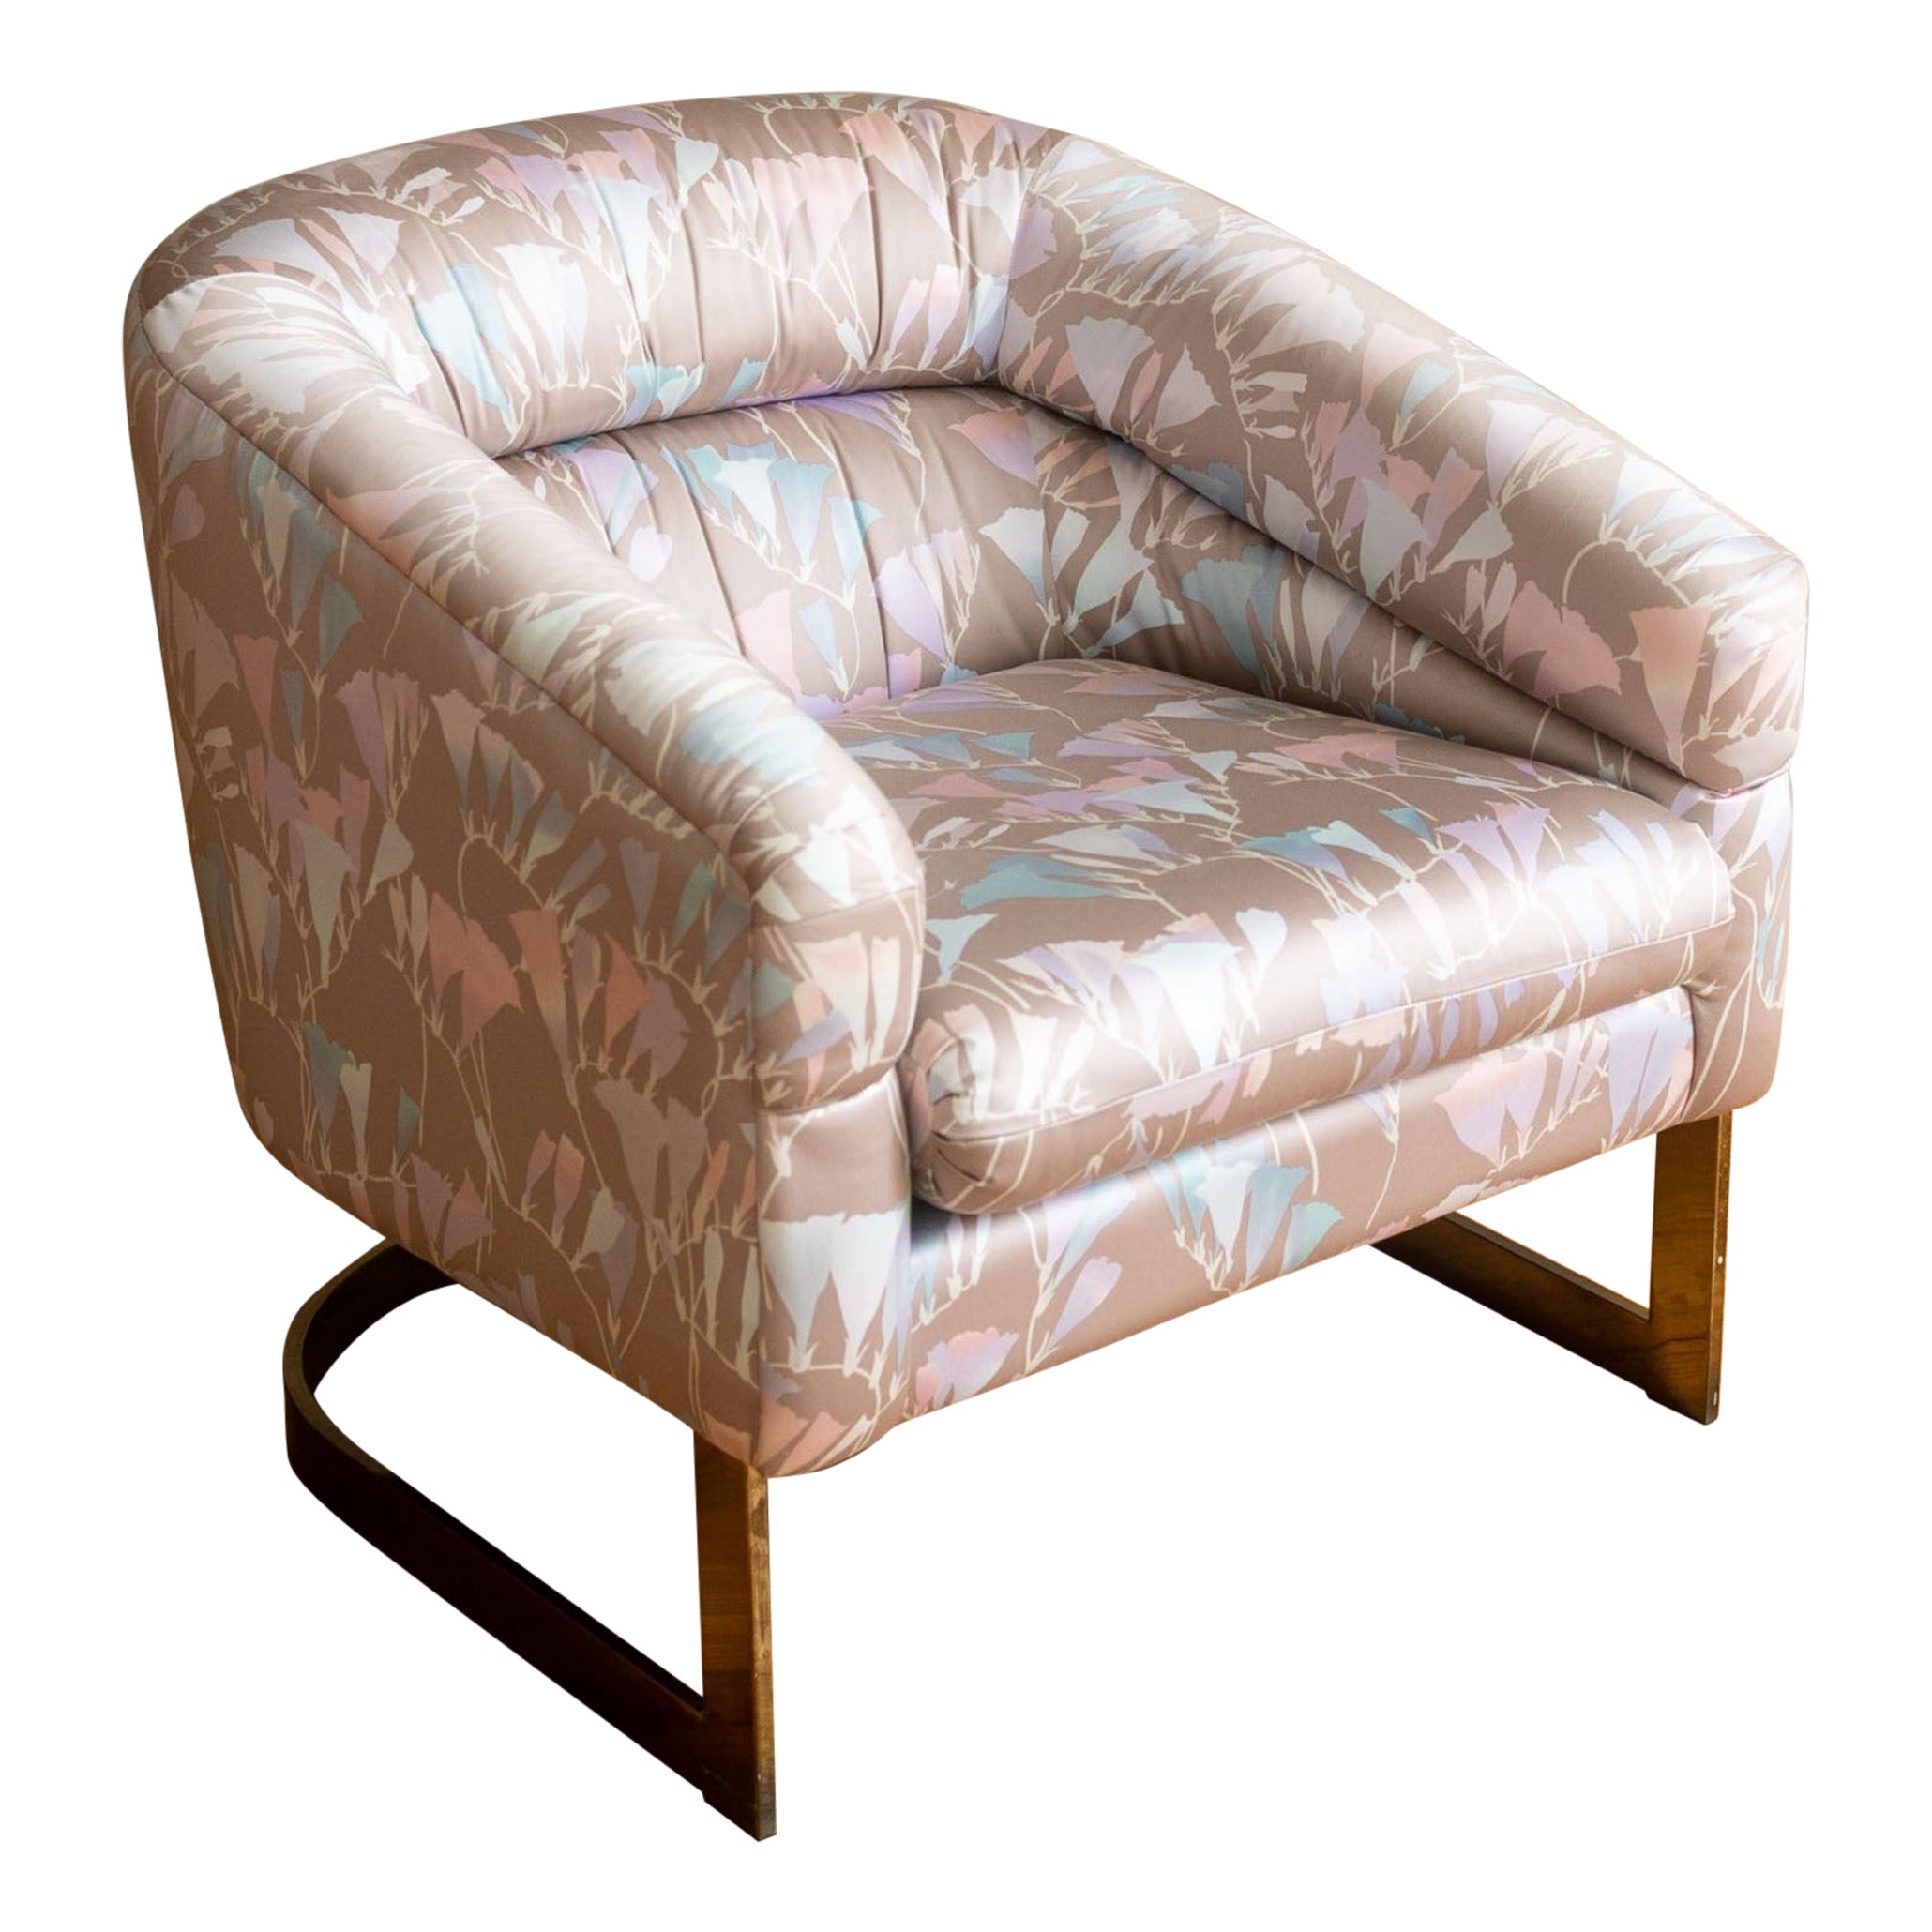 1980s Directional Lounge Chair by Kipp Stewart